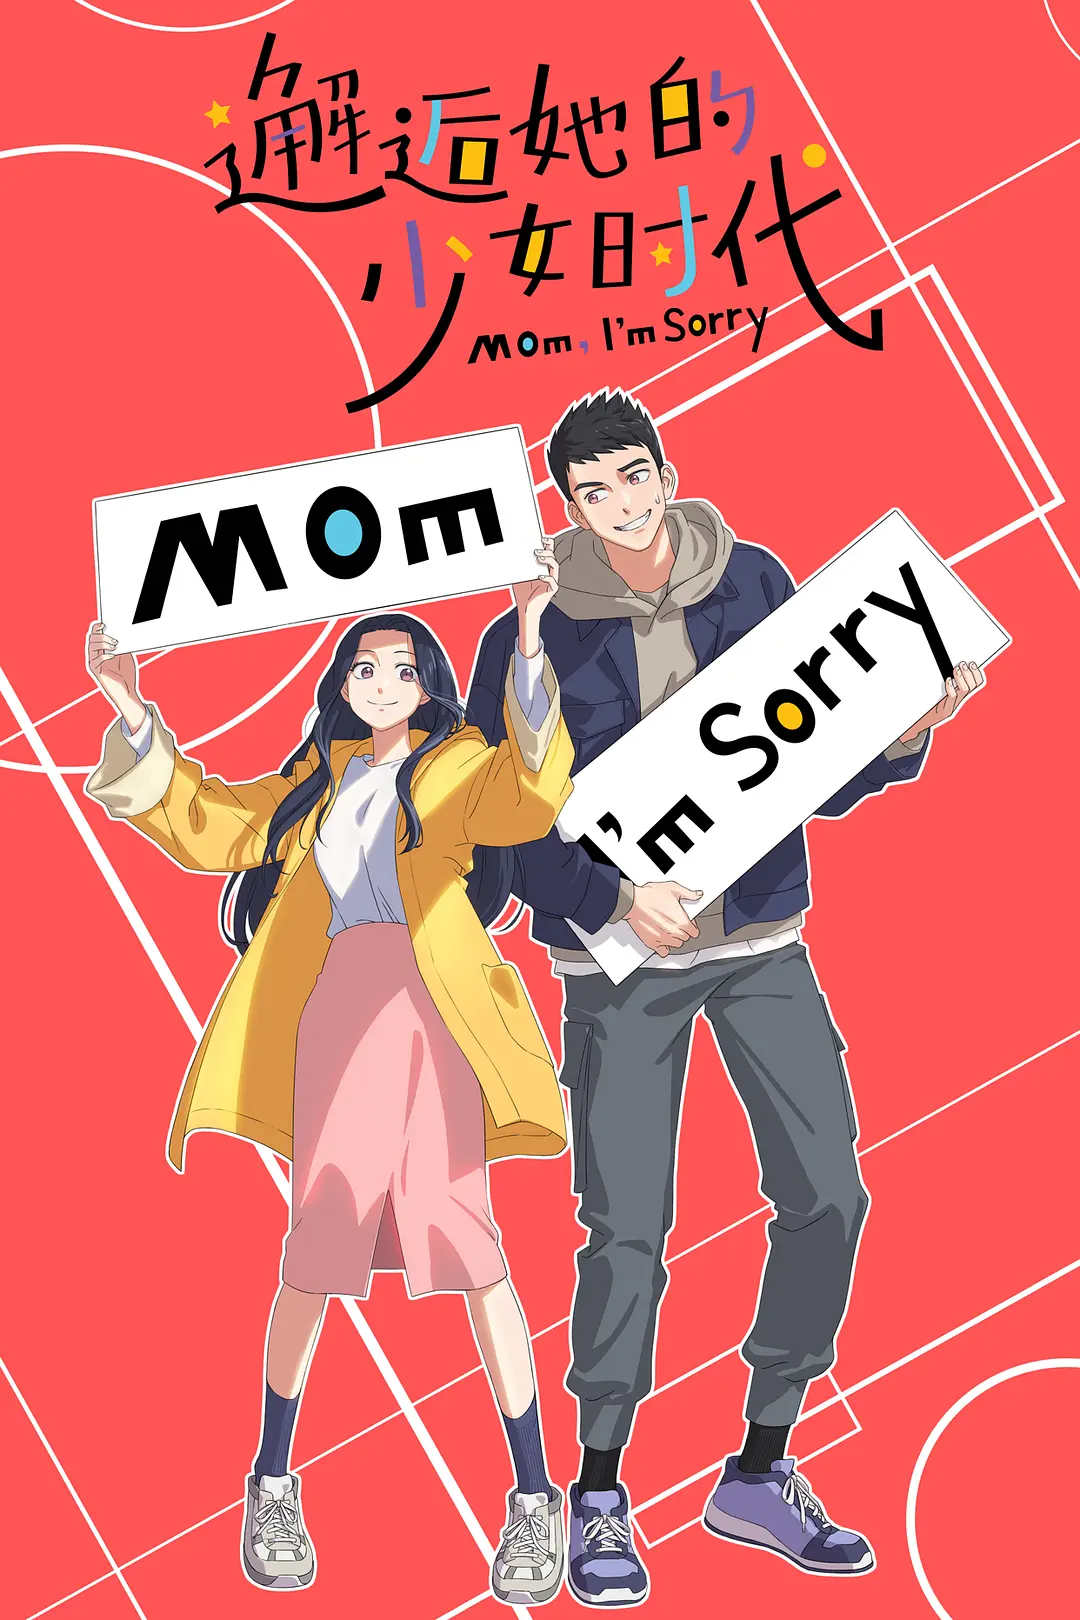 Mom, I’m Sorry Episode 11 Subtitle Indonesia